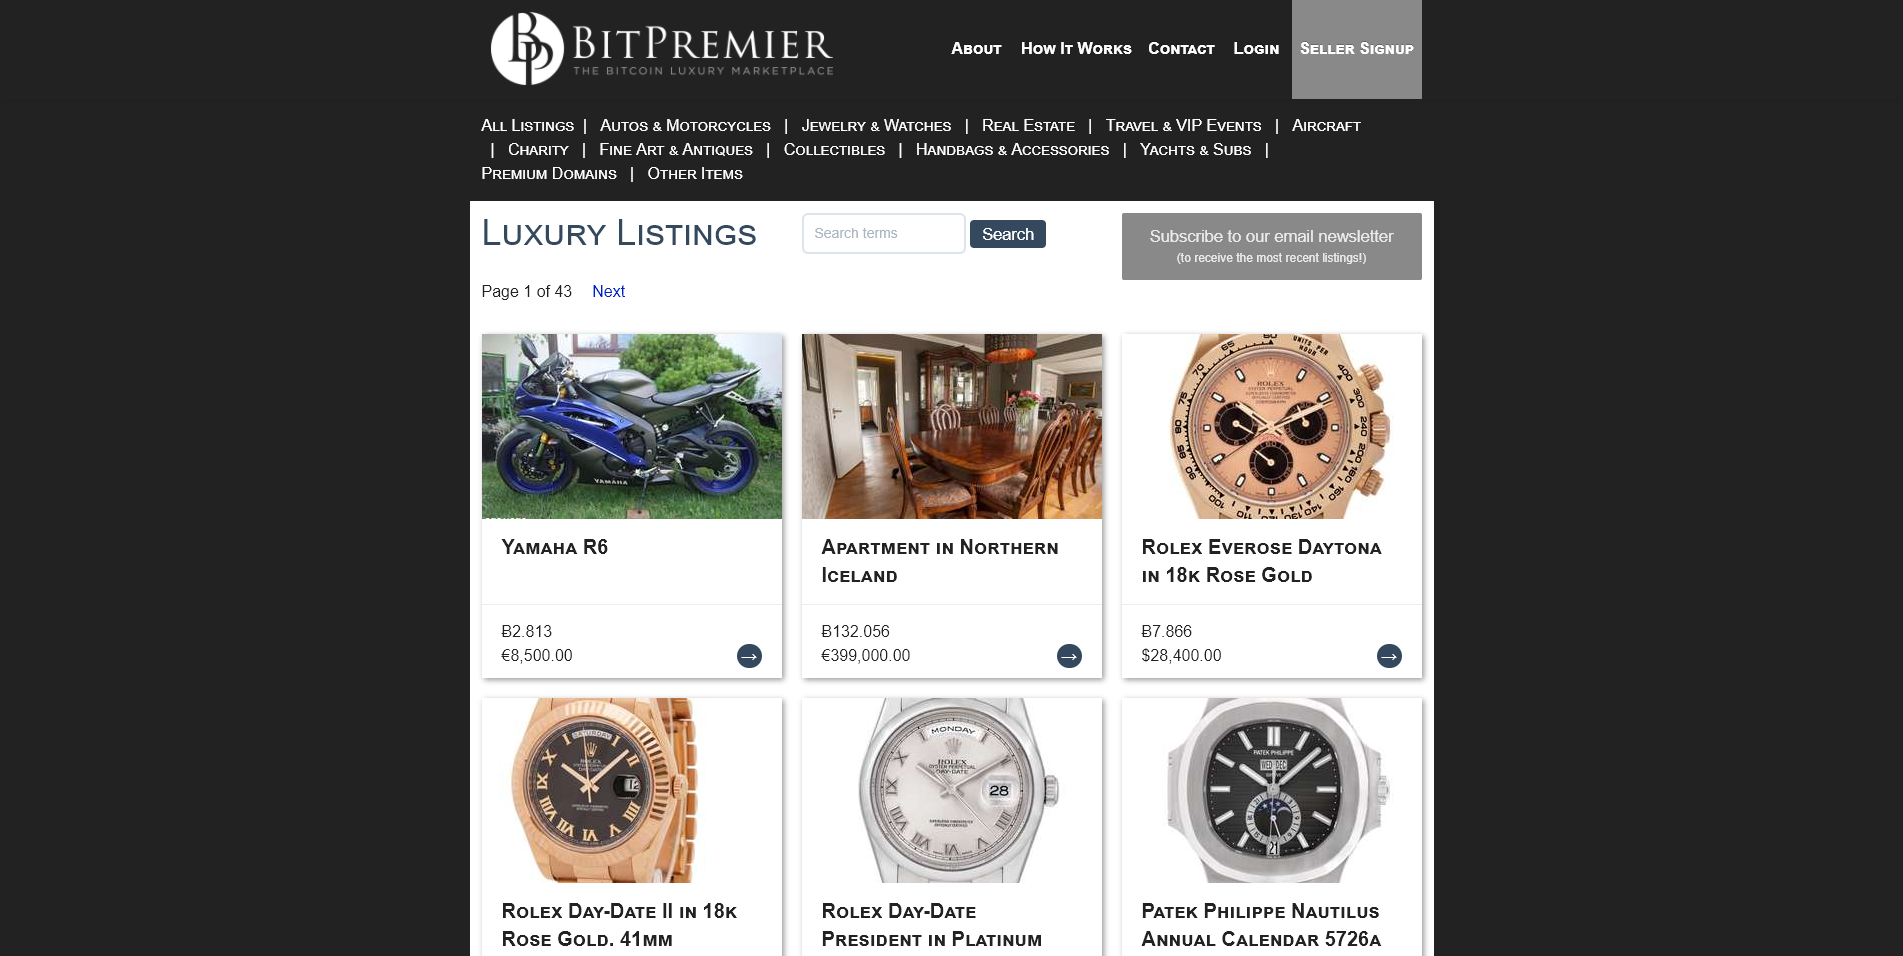 Bitcoin luxury goods shop BitPremier closing down ...